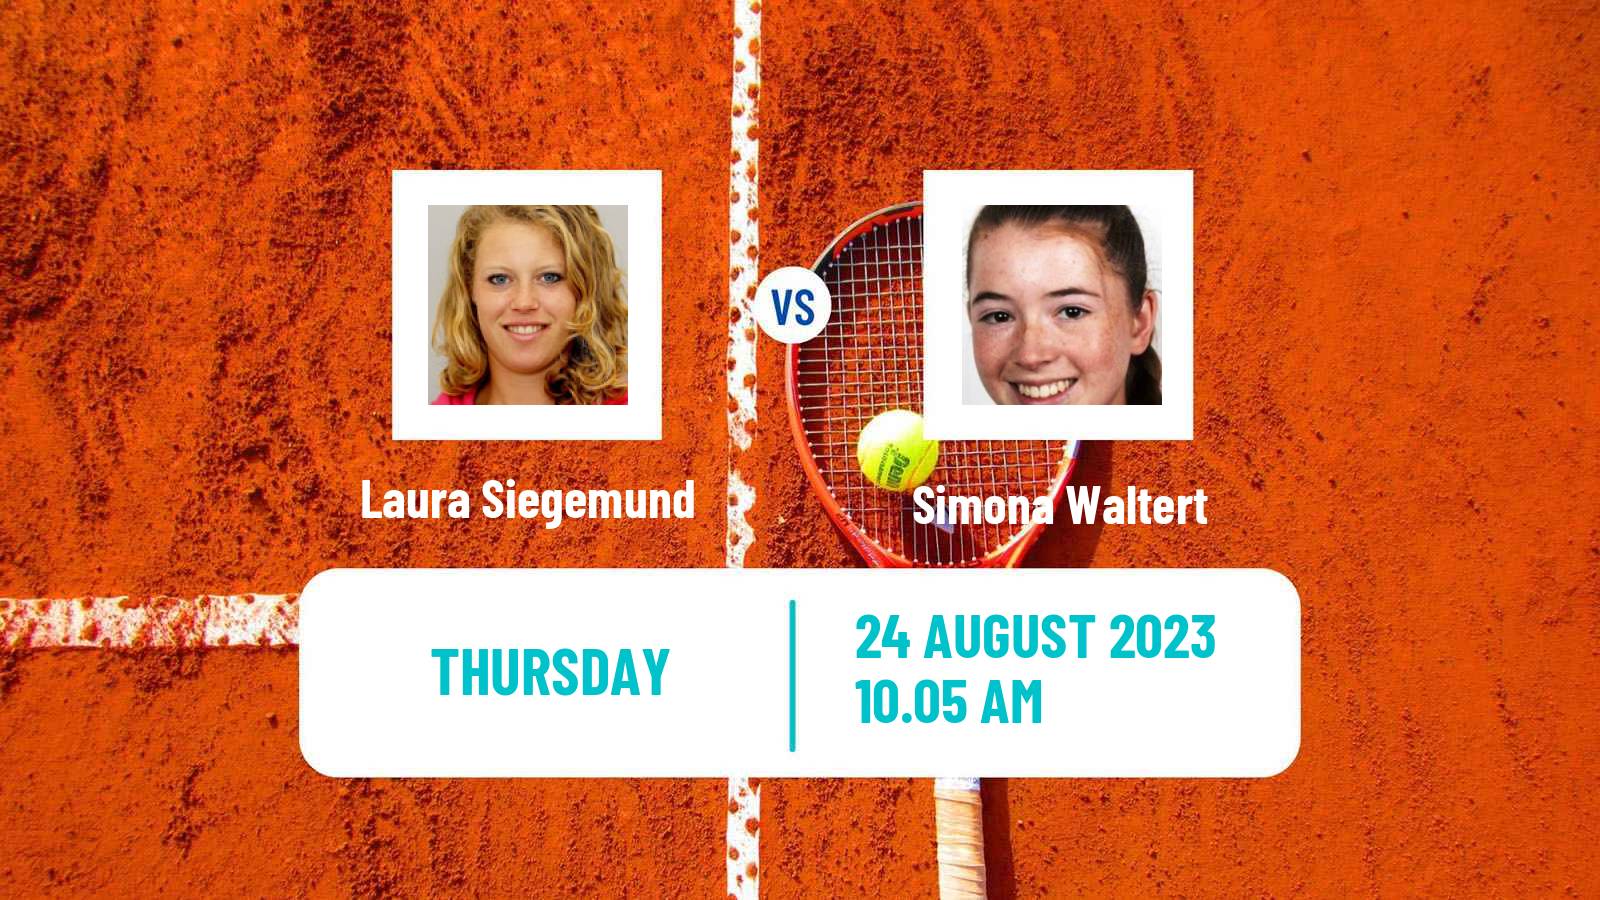 Tennis WTA US Open Laura Siegemund - Simona Waltert